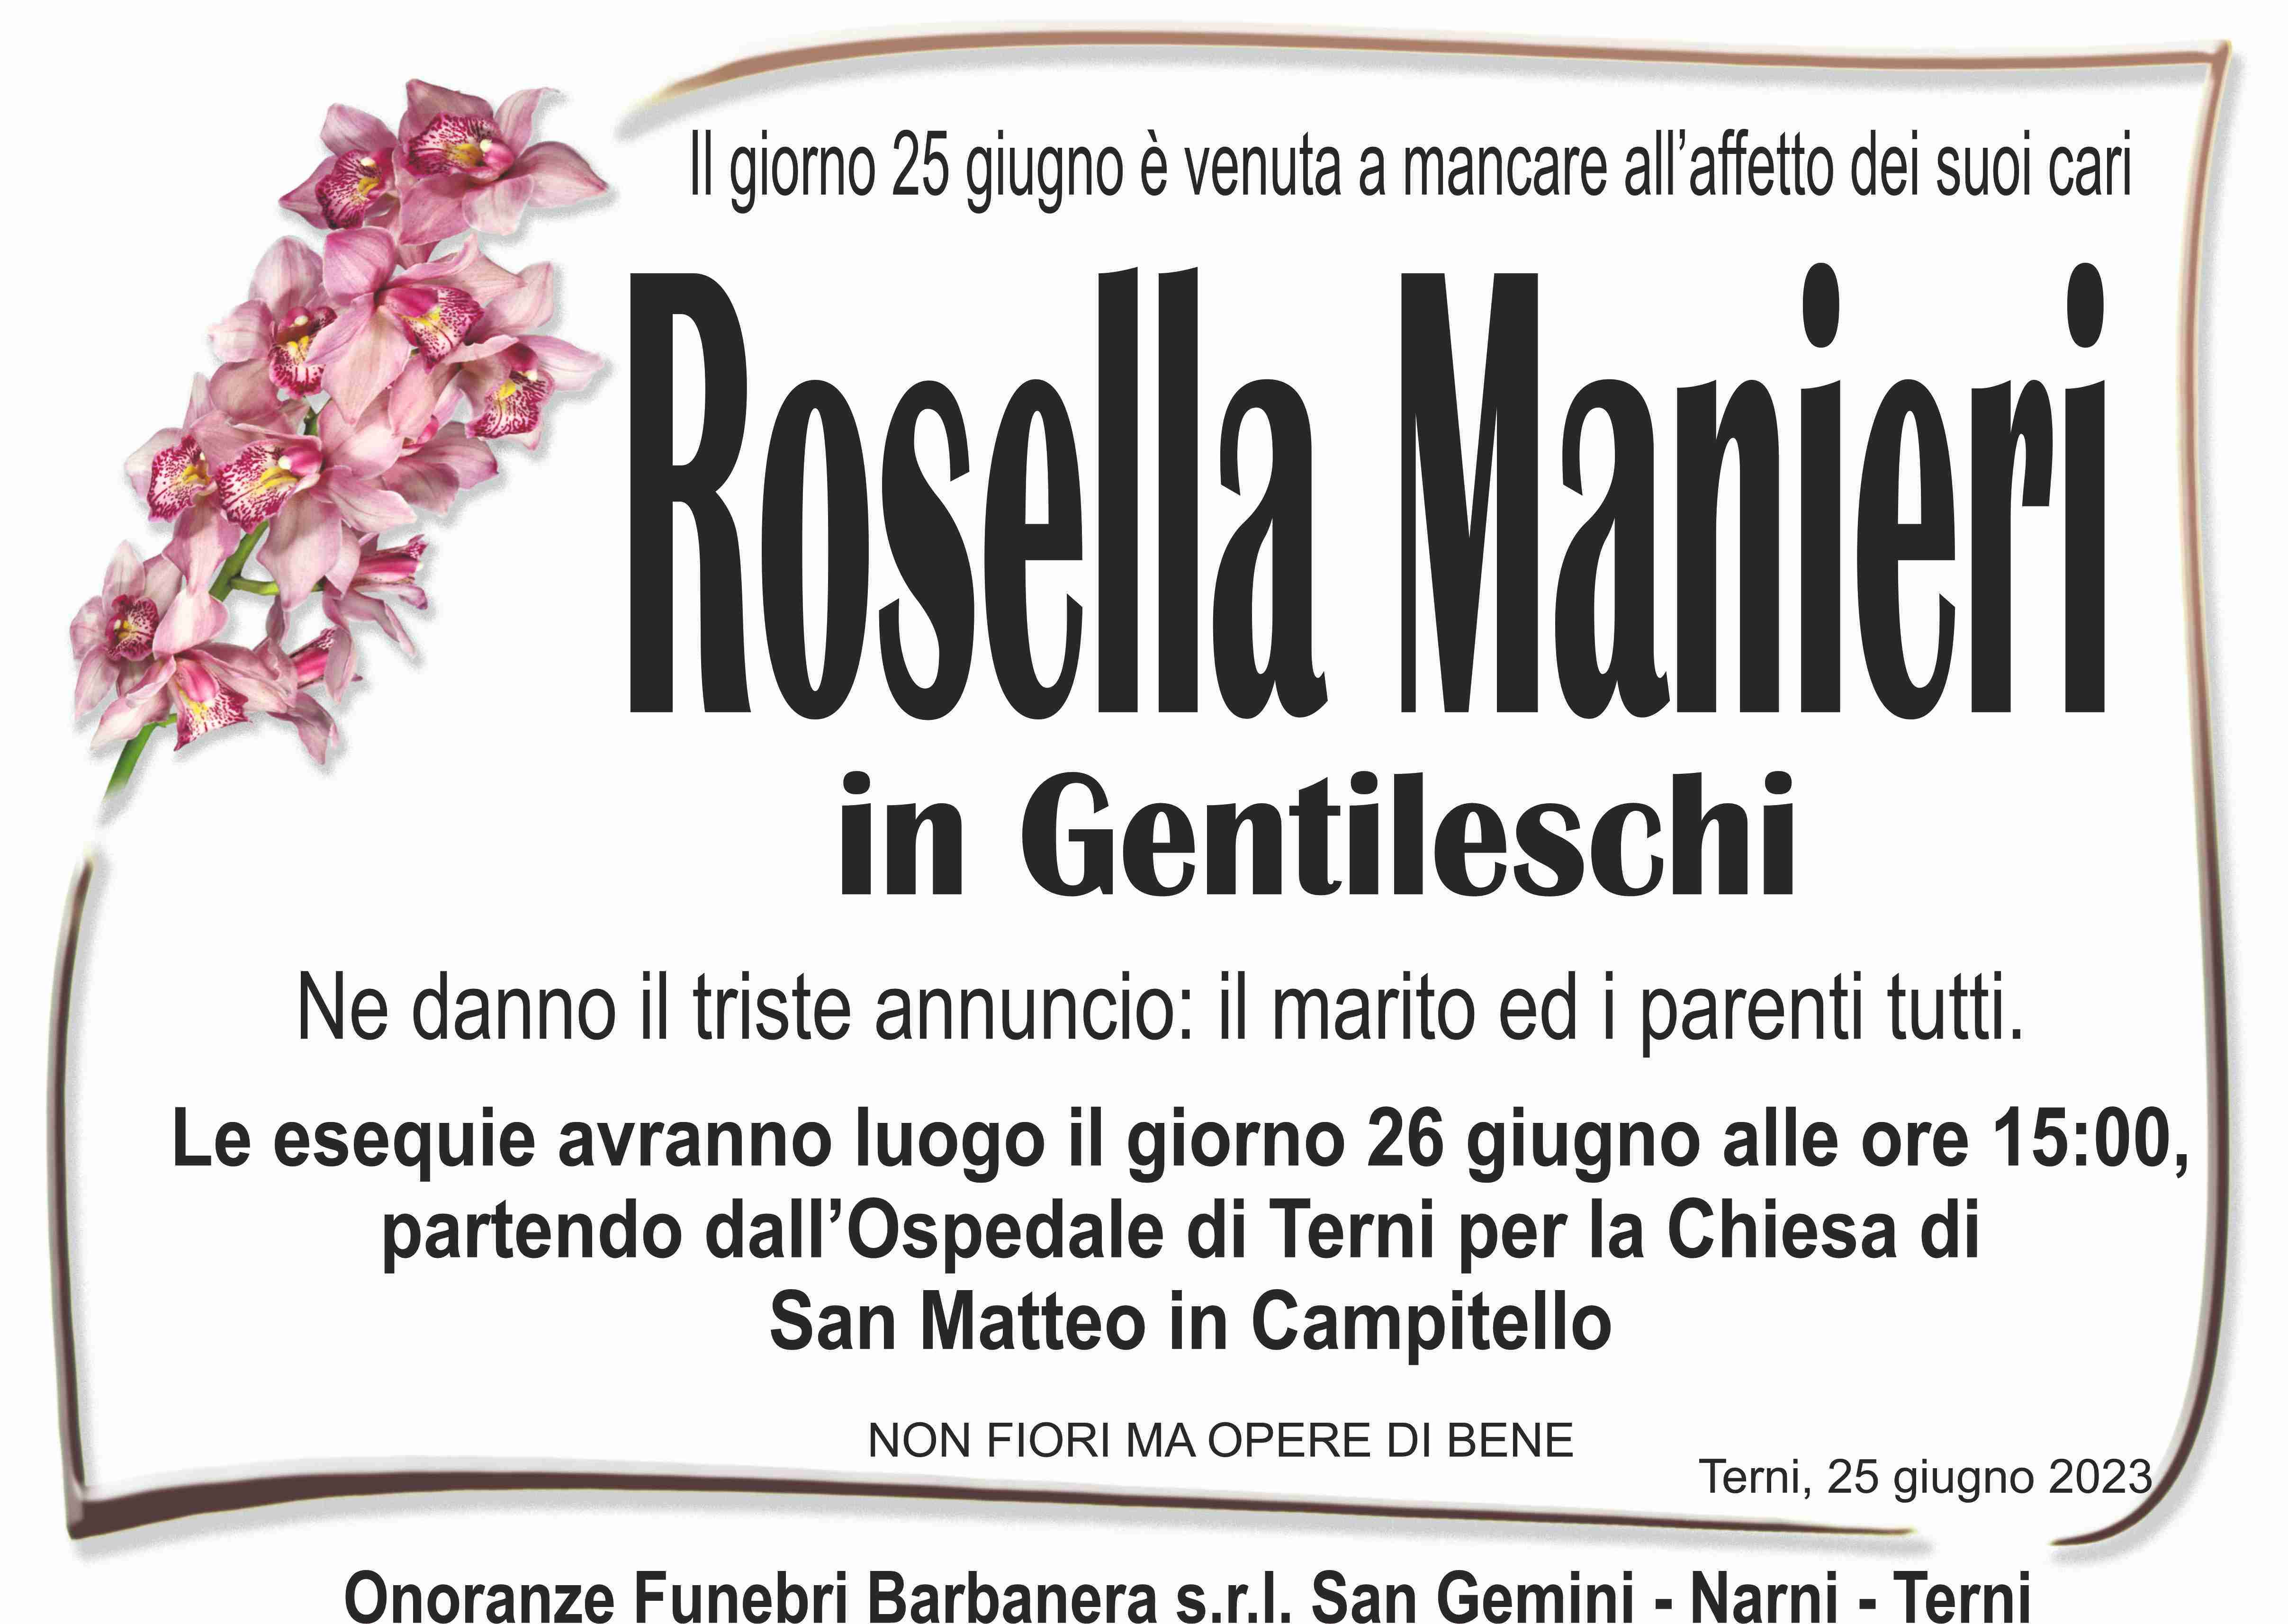 Rosella Manieri